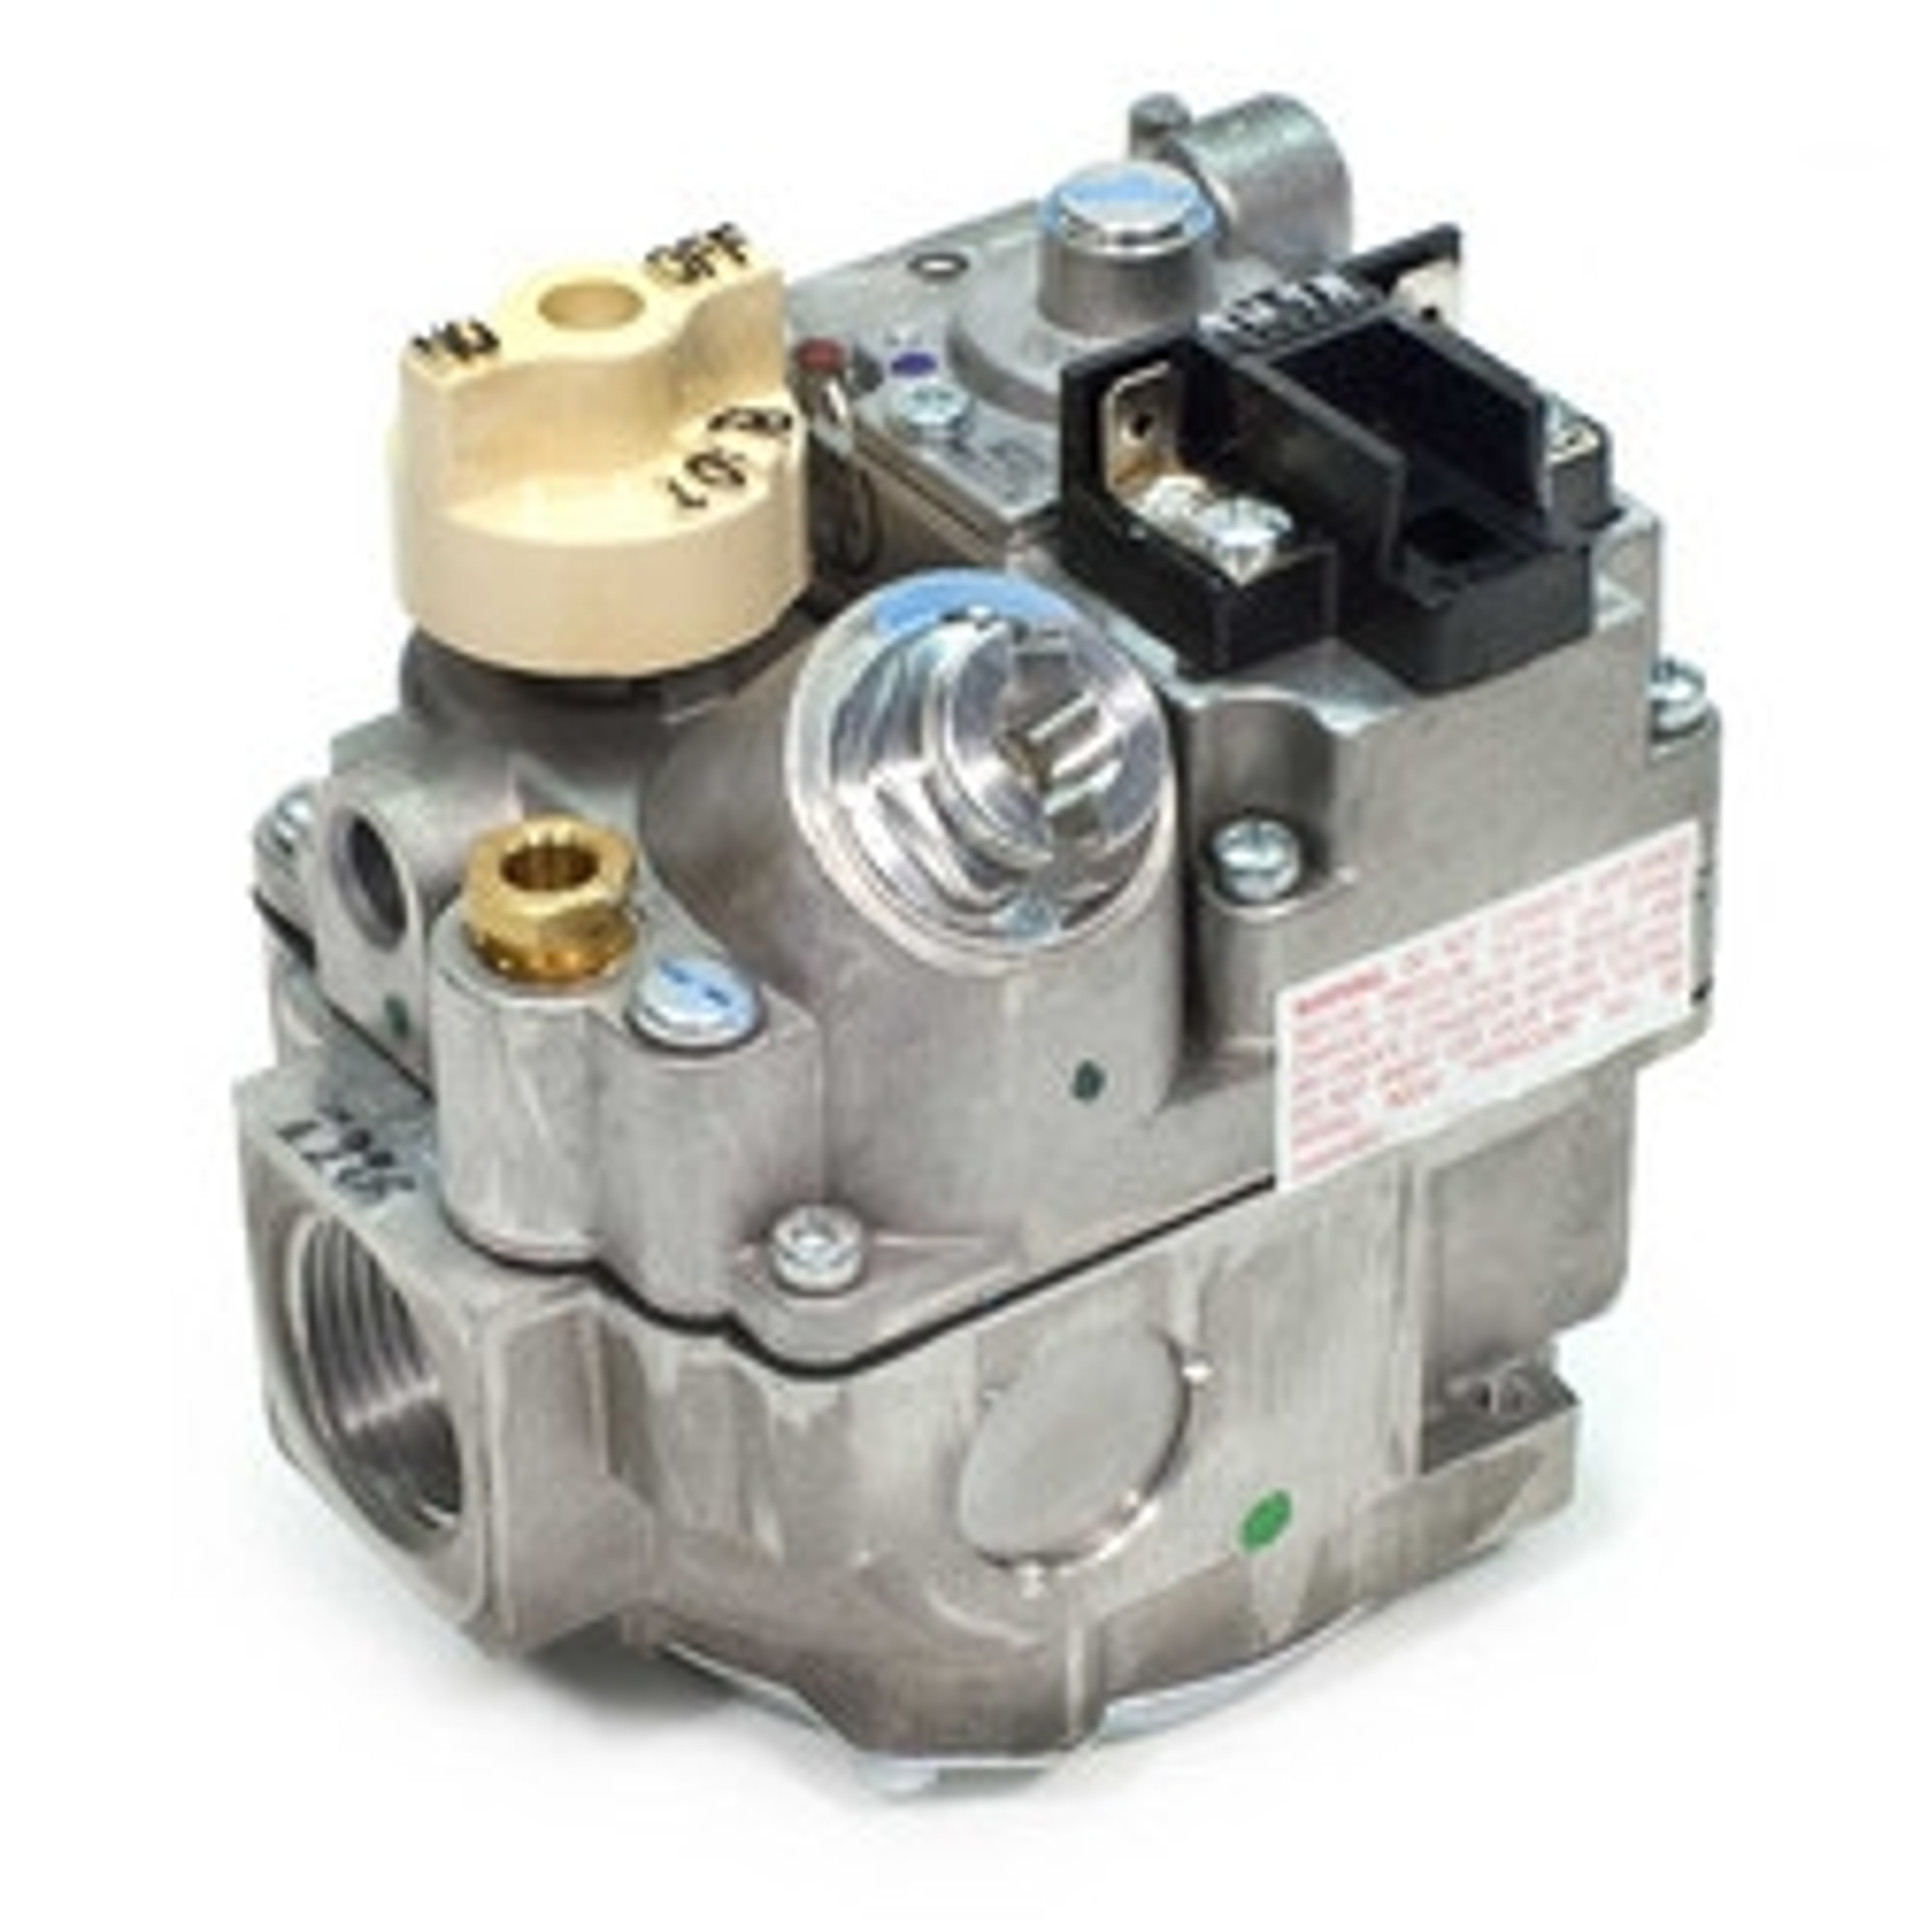 robertshaw-700-406-24-volt-combination-gas-valve-uni-kit-robertshaw-700-406-24-volt